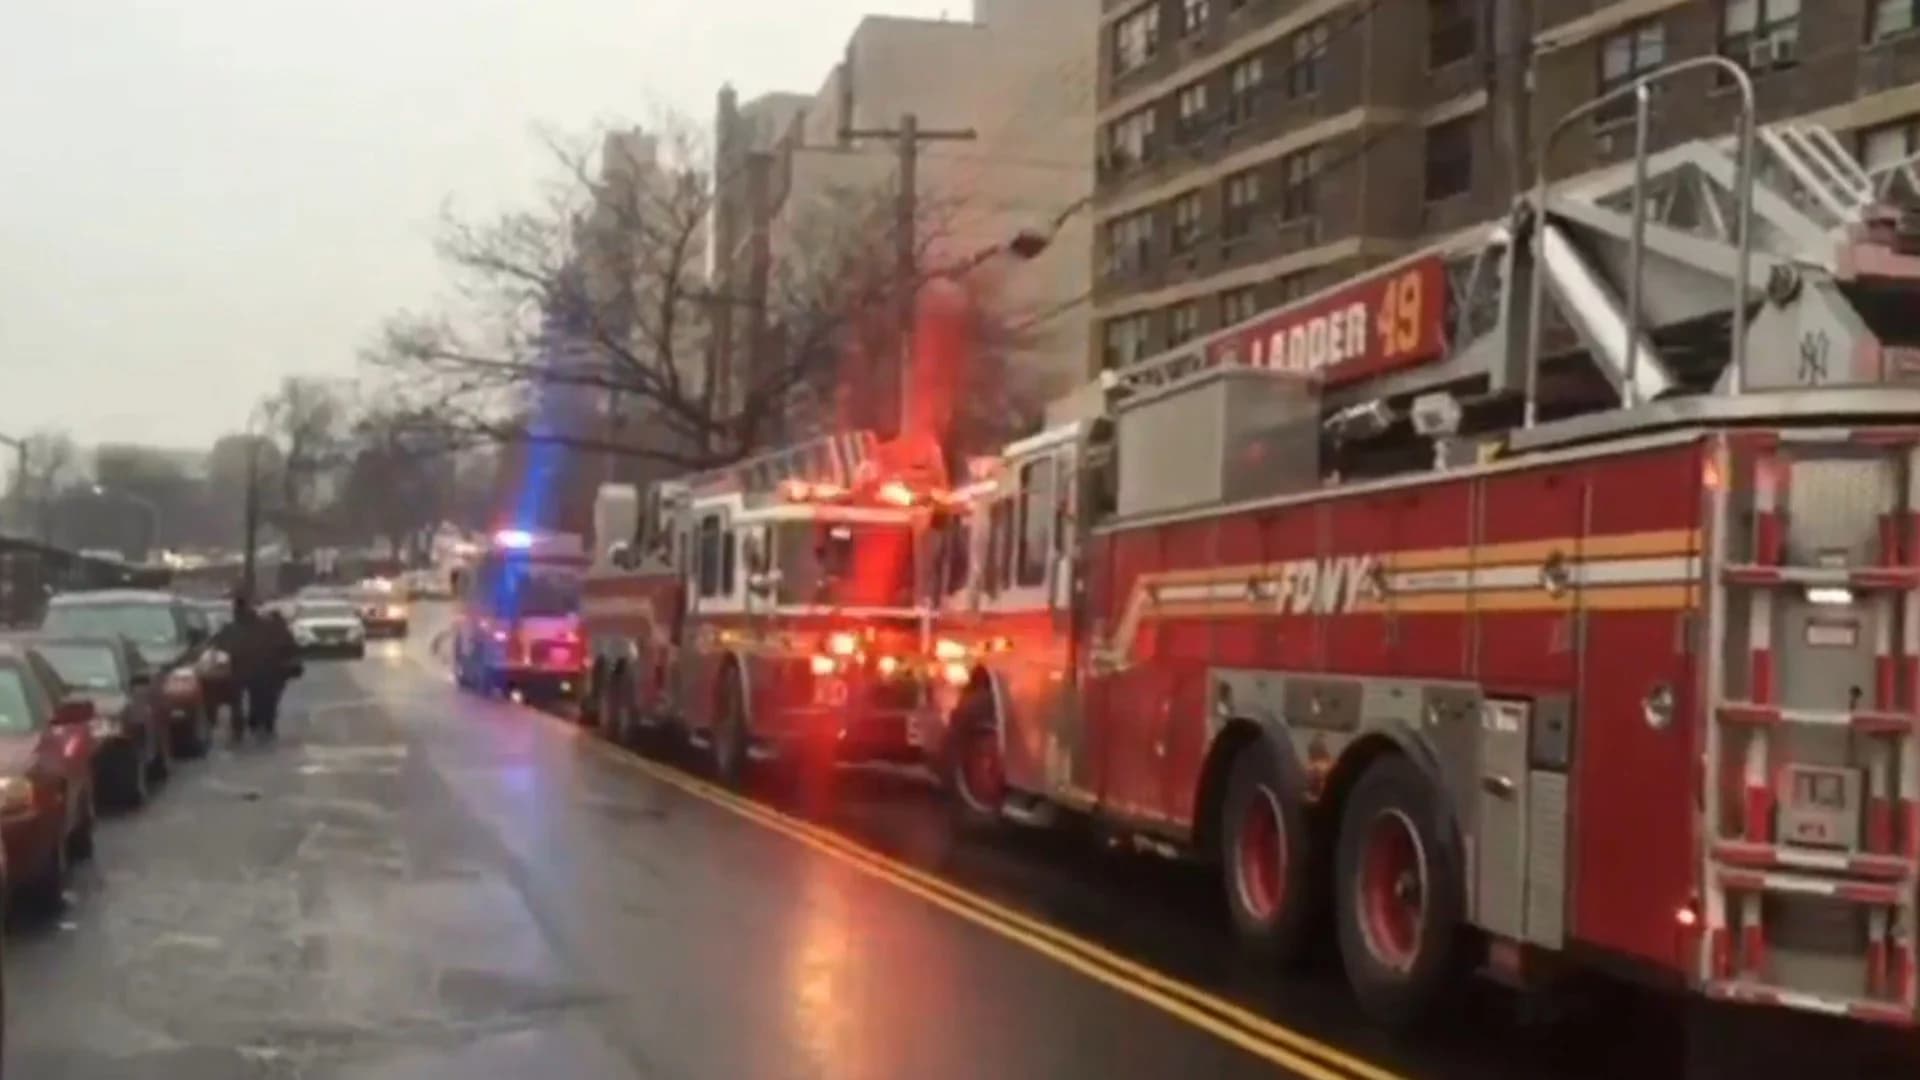 6 injured in Bronx high-rise fire